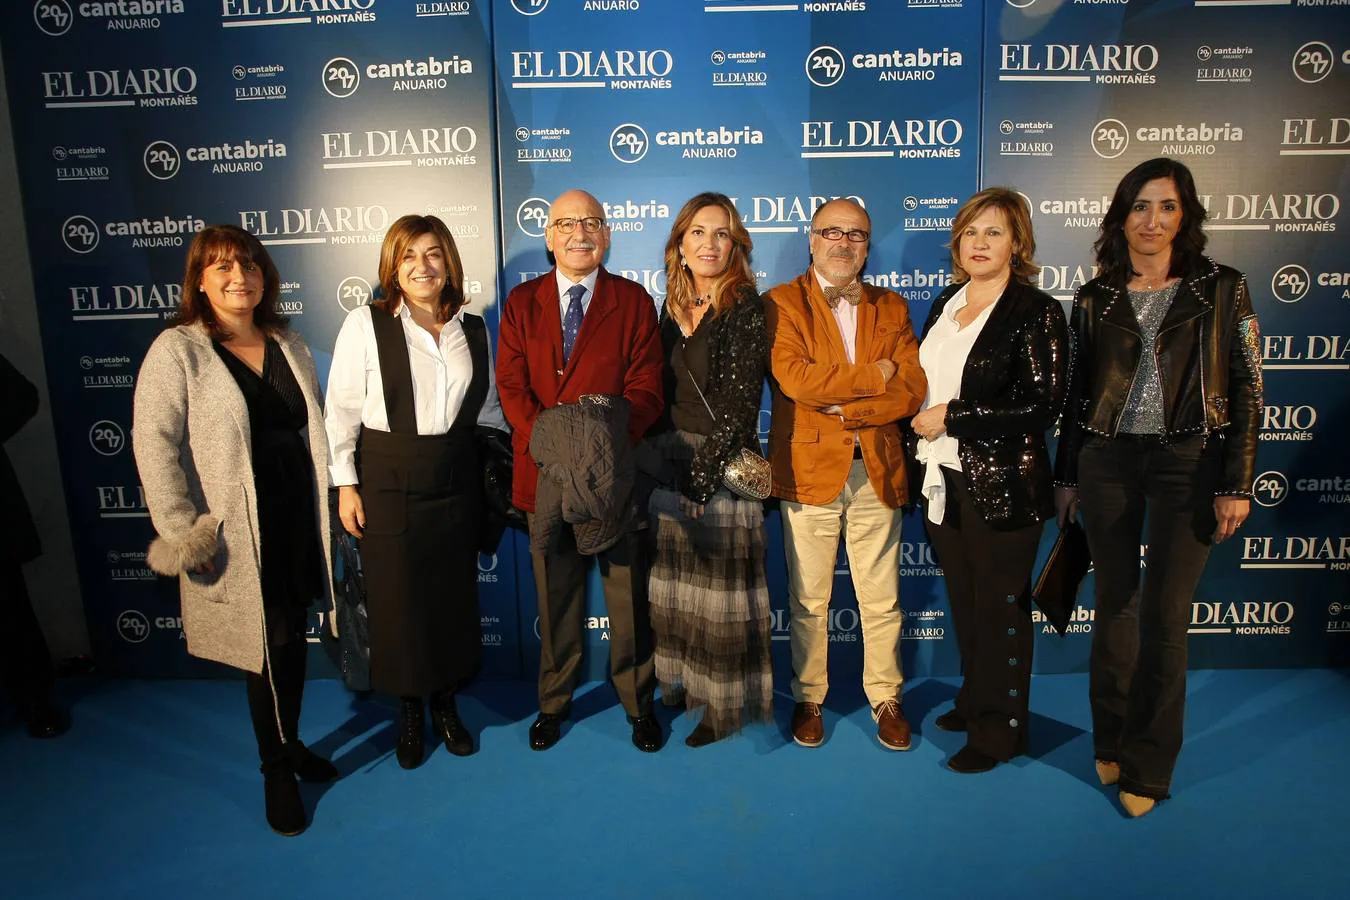 Elvira Benito, María José Sáenz de Buruaga, Federico Lucendo Pombo, Marta Rubio, Cayo Martín Franco, María Oláiz y Sara Carrión.